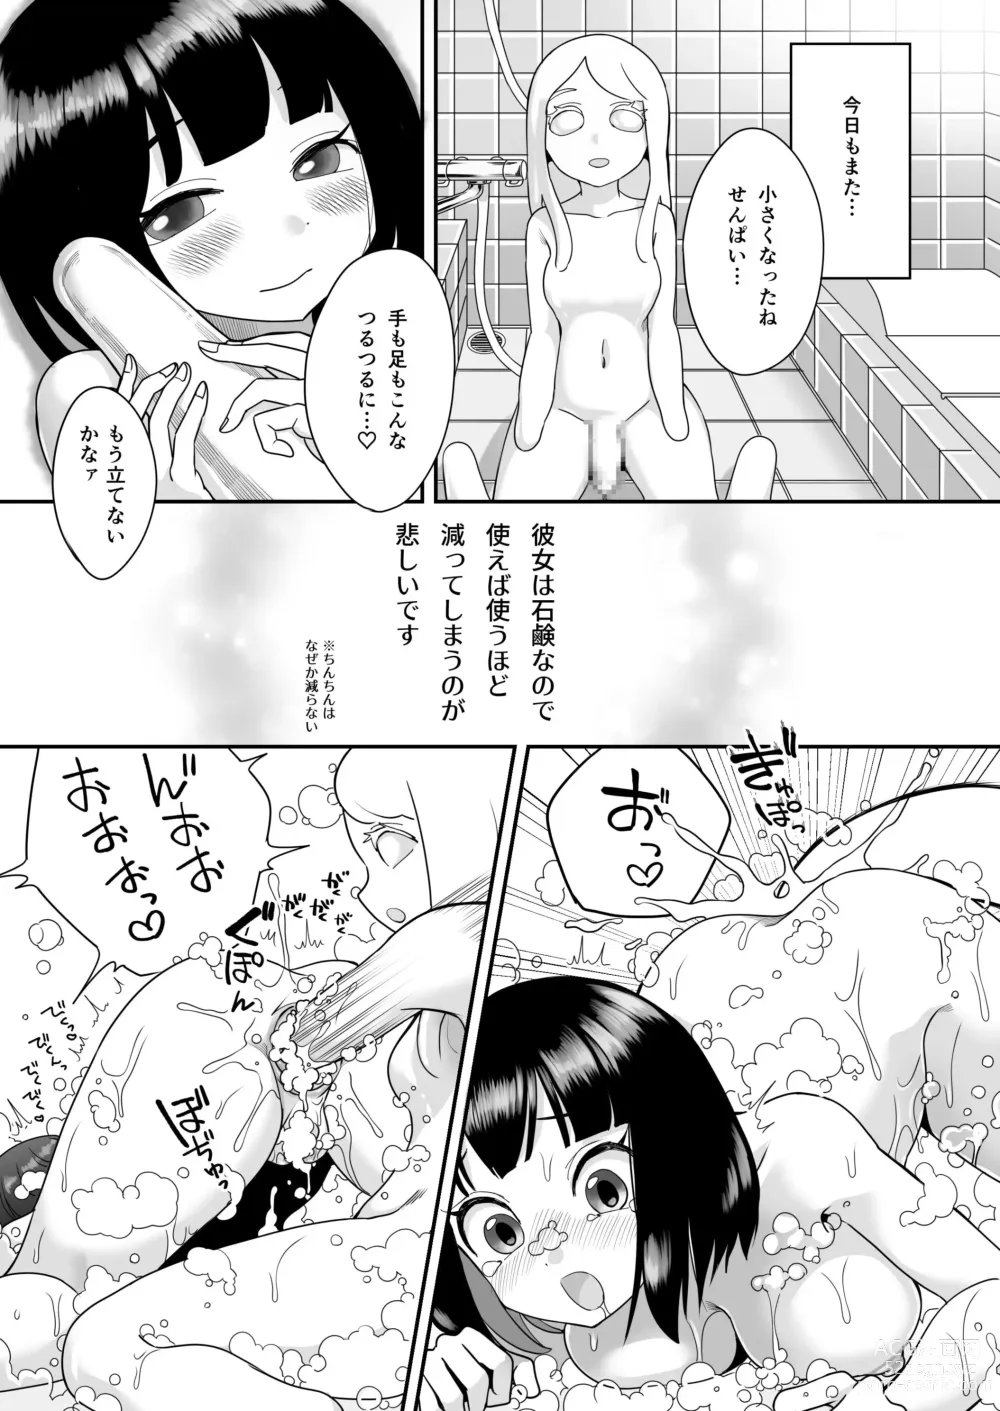 Page 8 of doujinshi Katamaru Sekai no Arukikata - walking in a hardened world #9